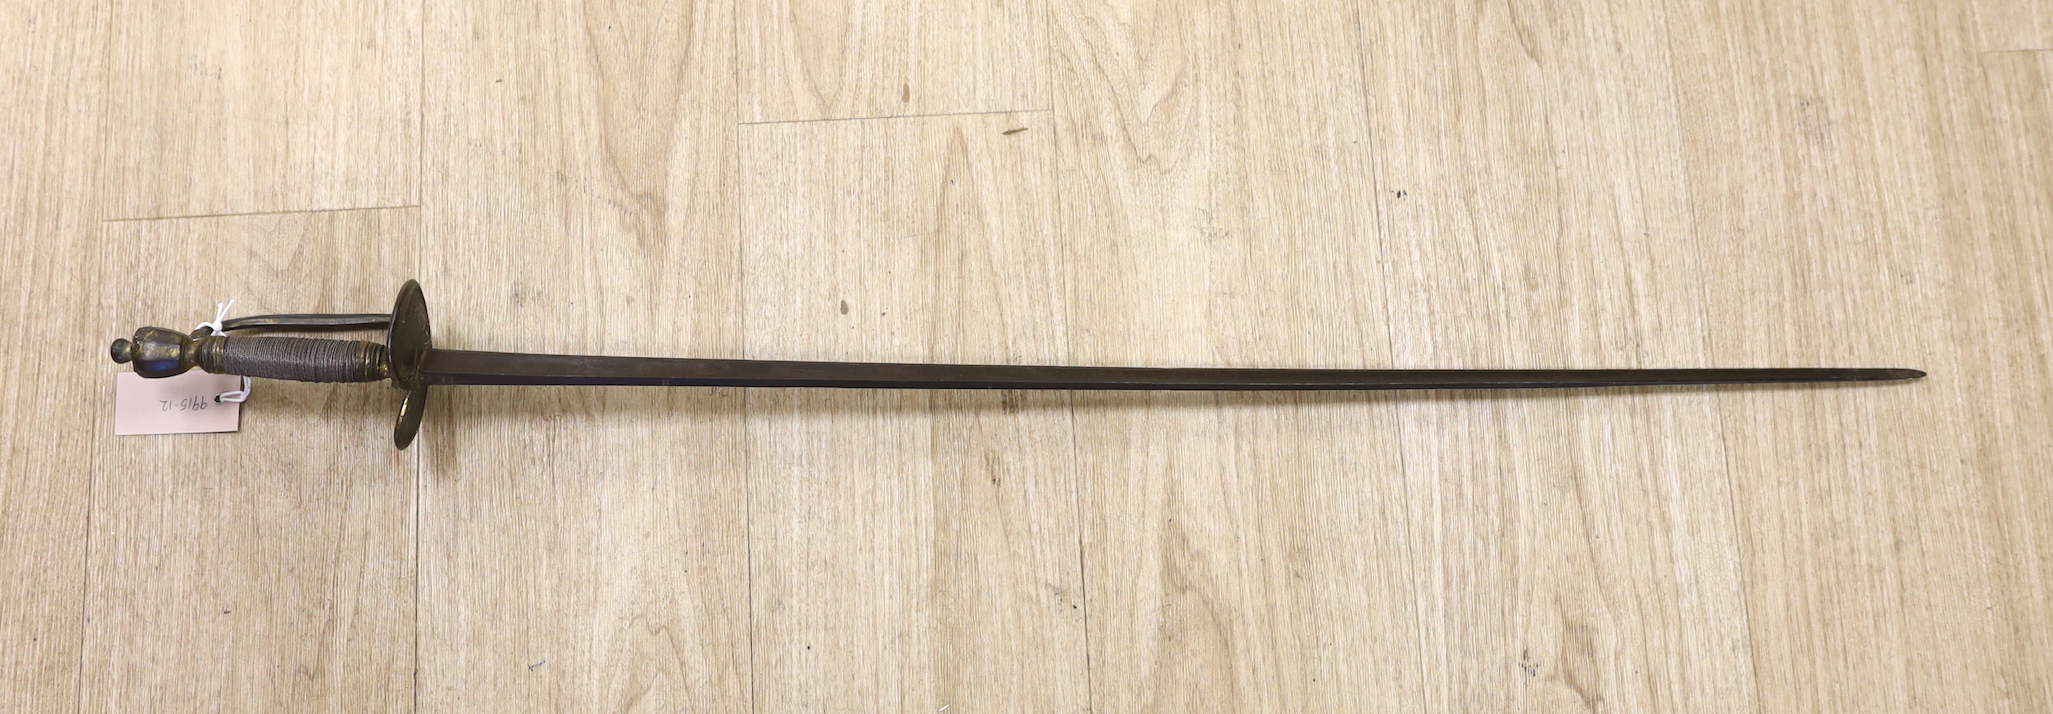 A 1796 pattern Infantry officer’s sword, 99cm long